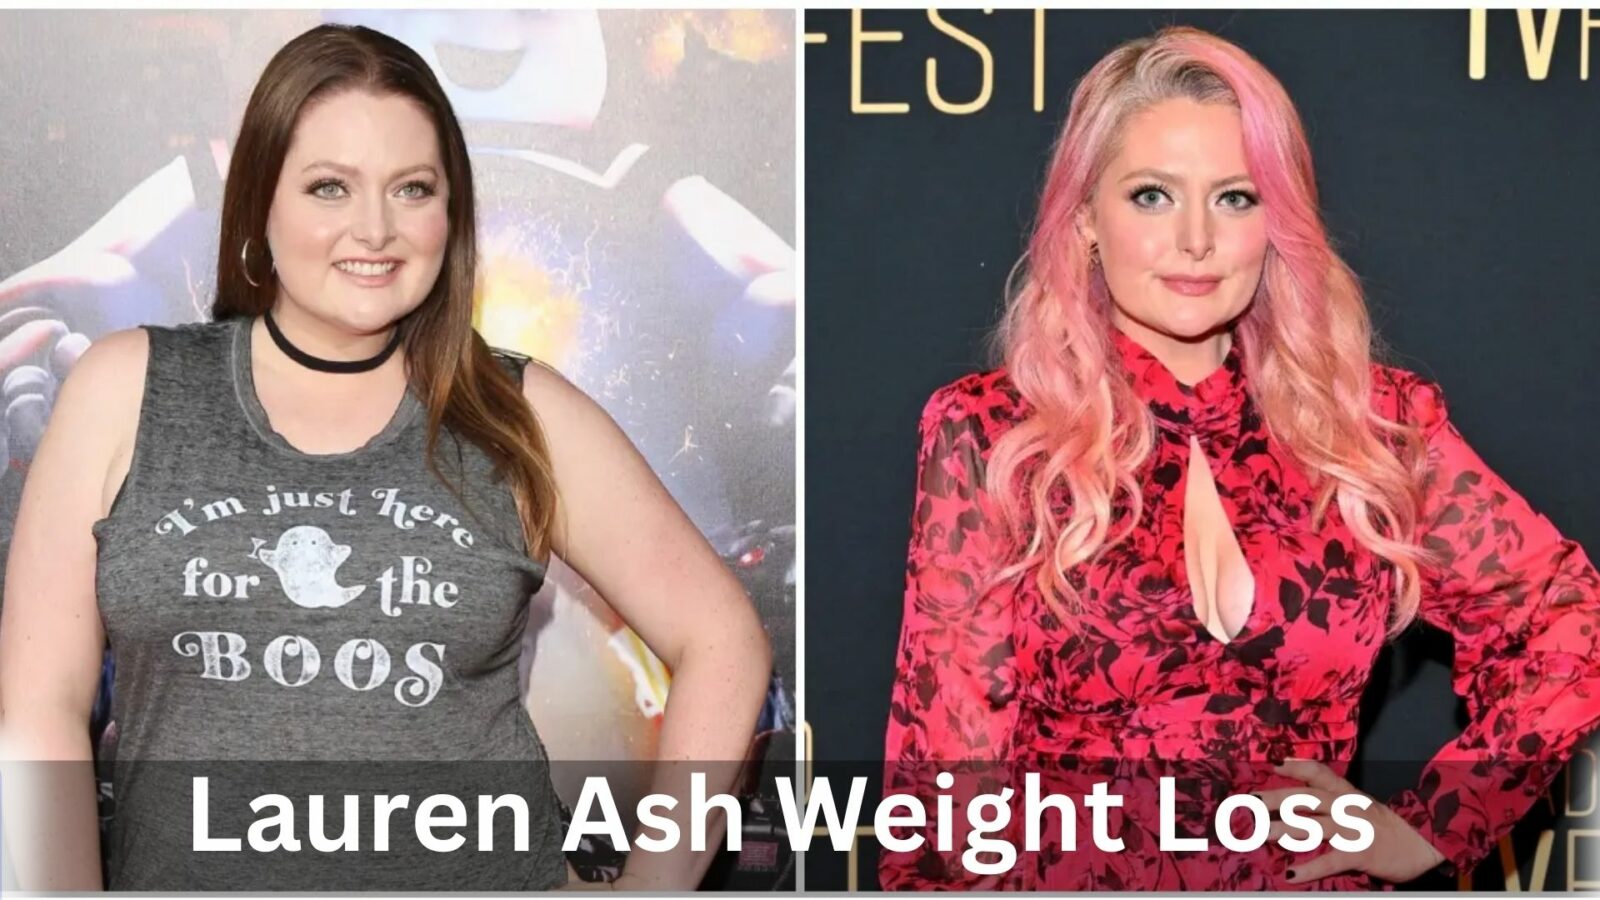 Lauren Ash Weight Loss